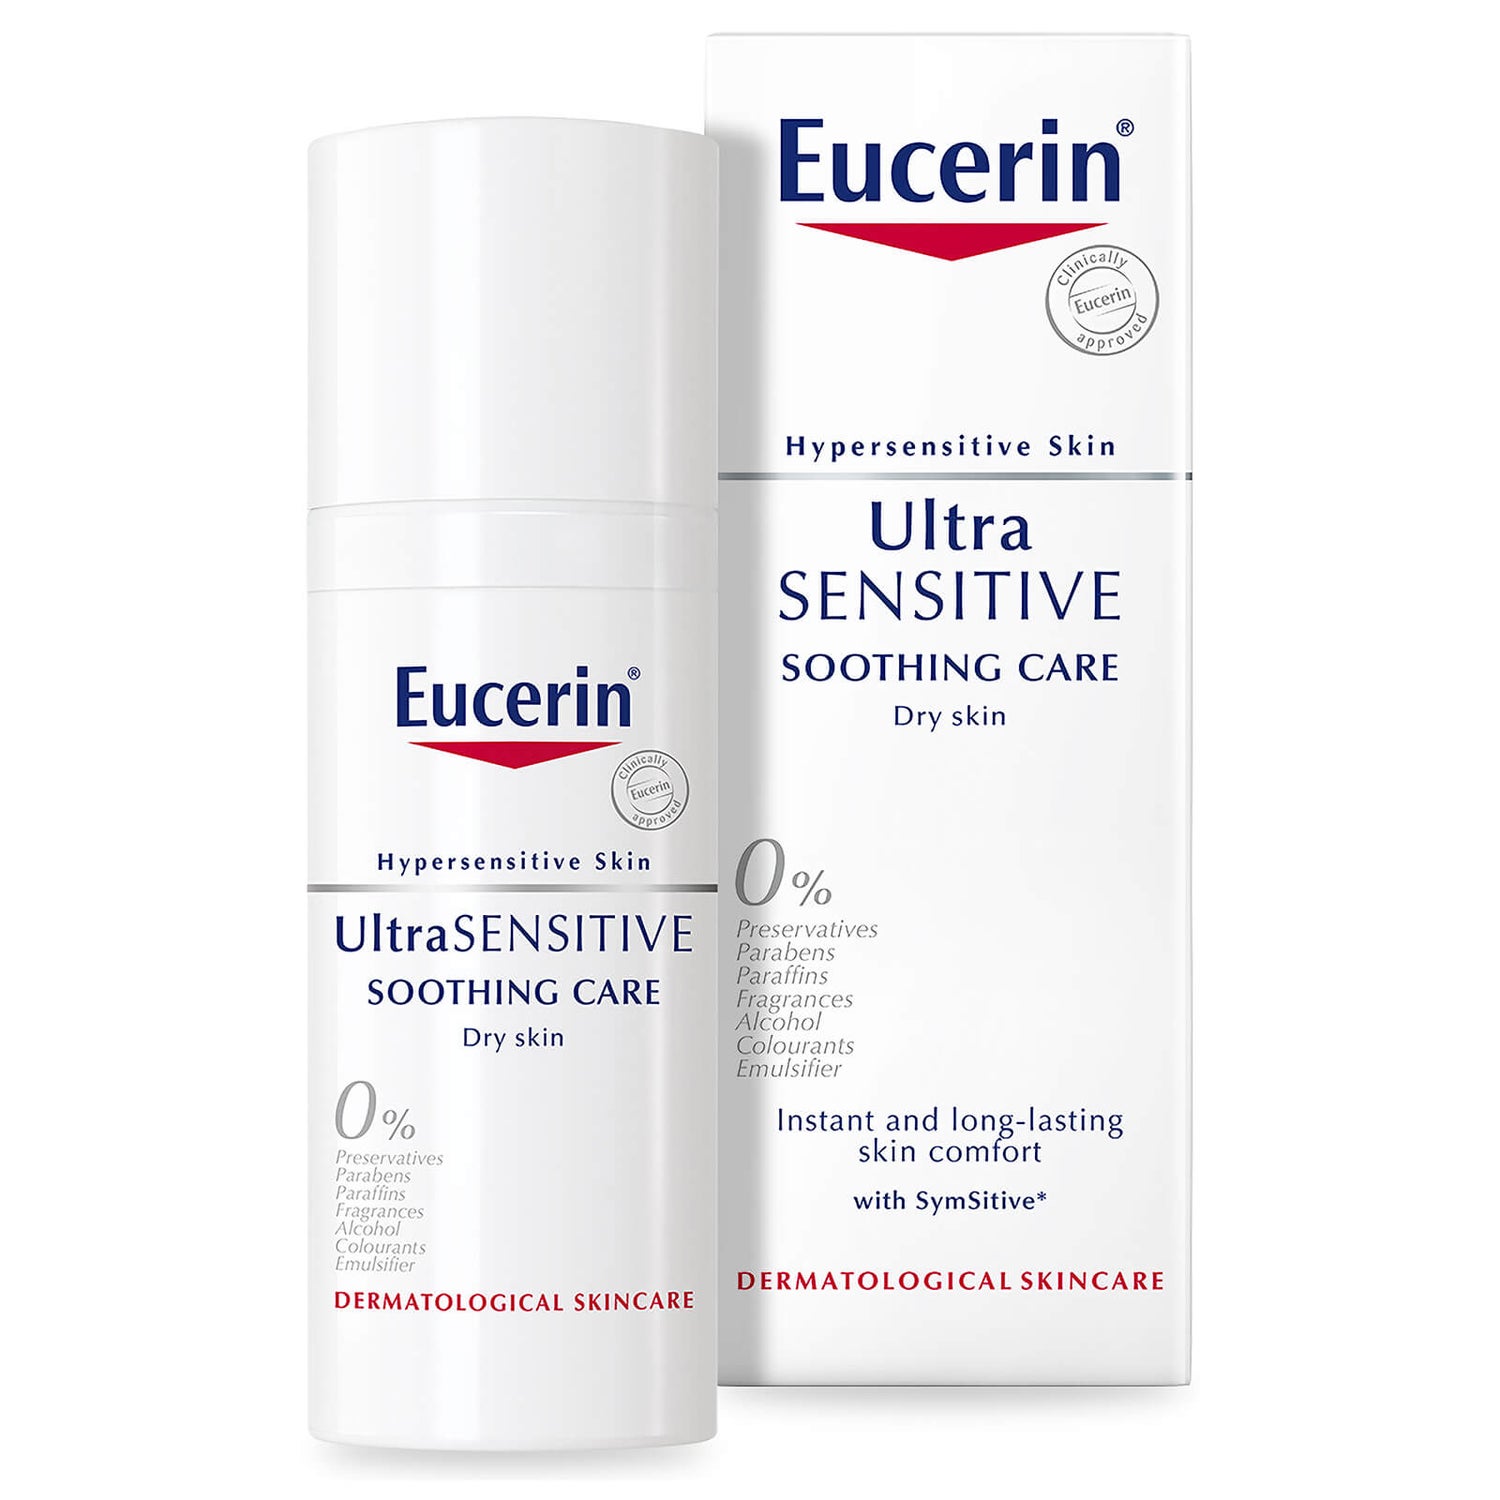 Eucerin® Hypersensitive Skin Ultra Sensitive Soothing Care (50ml)